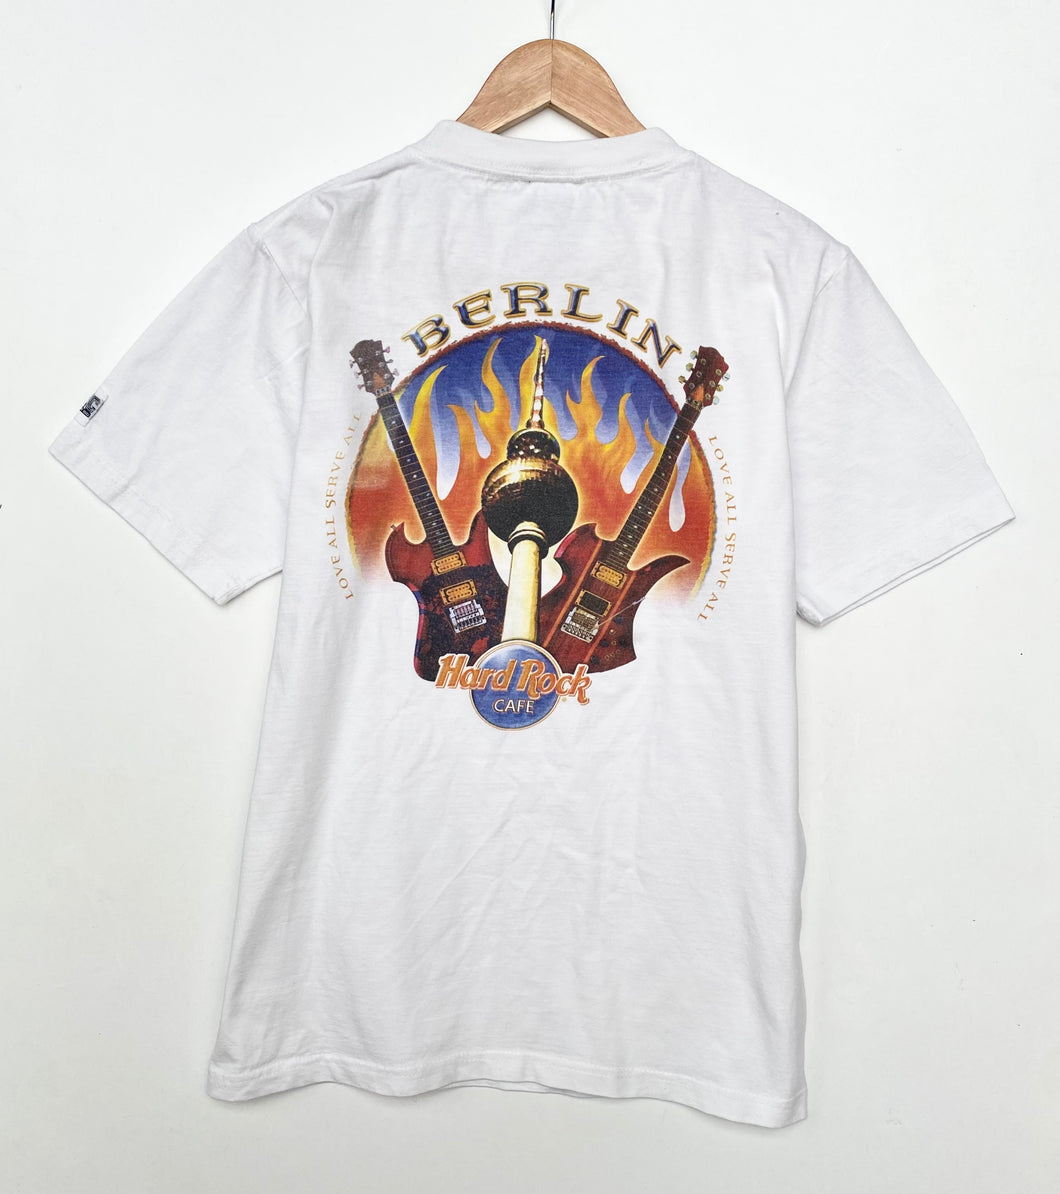 Hard Rock Cafe Berlin T-shirt (S)